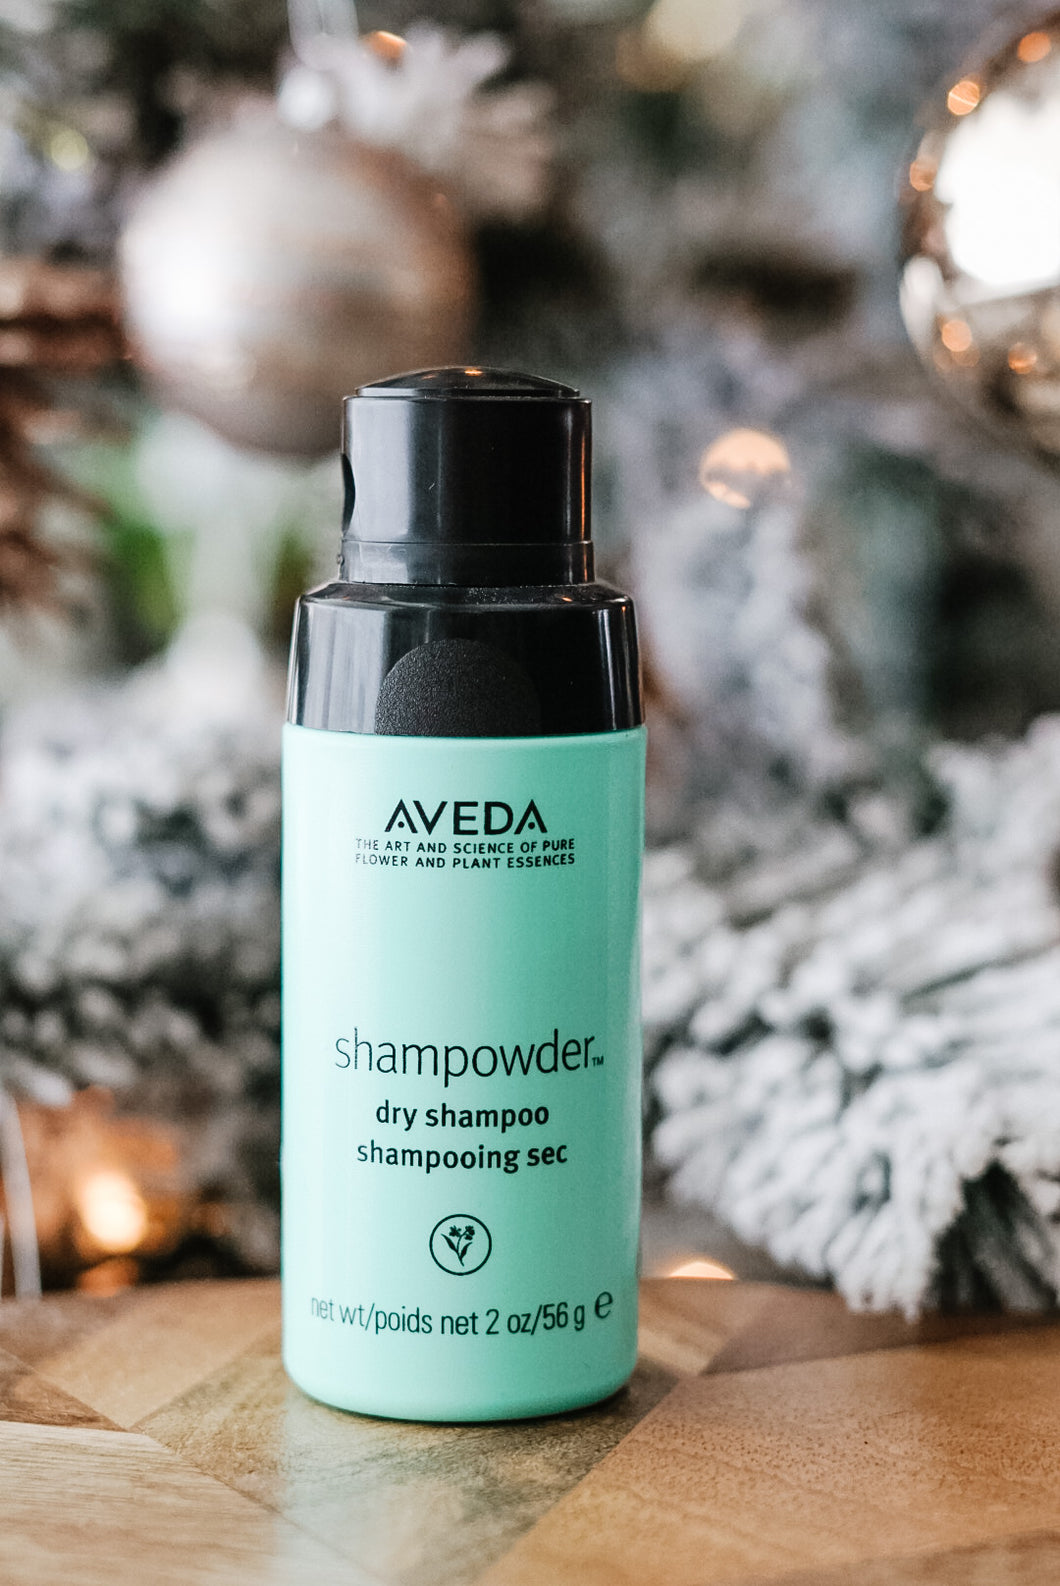 AVEDA Shampure Dry Shampoo